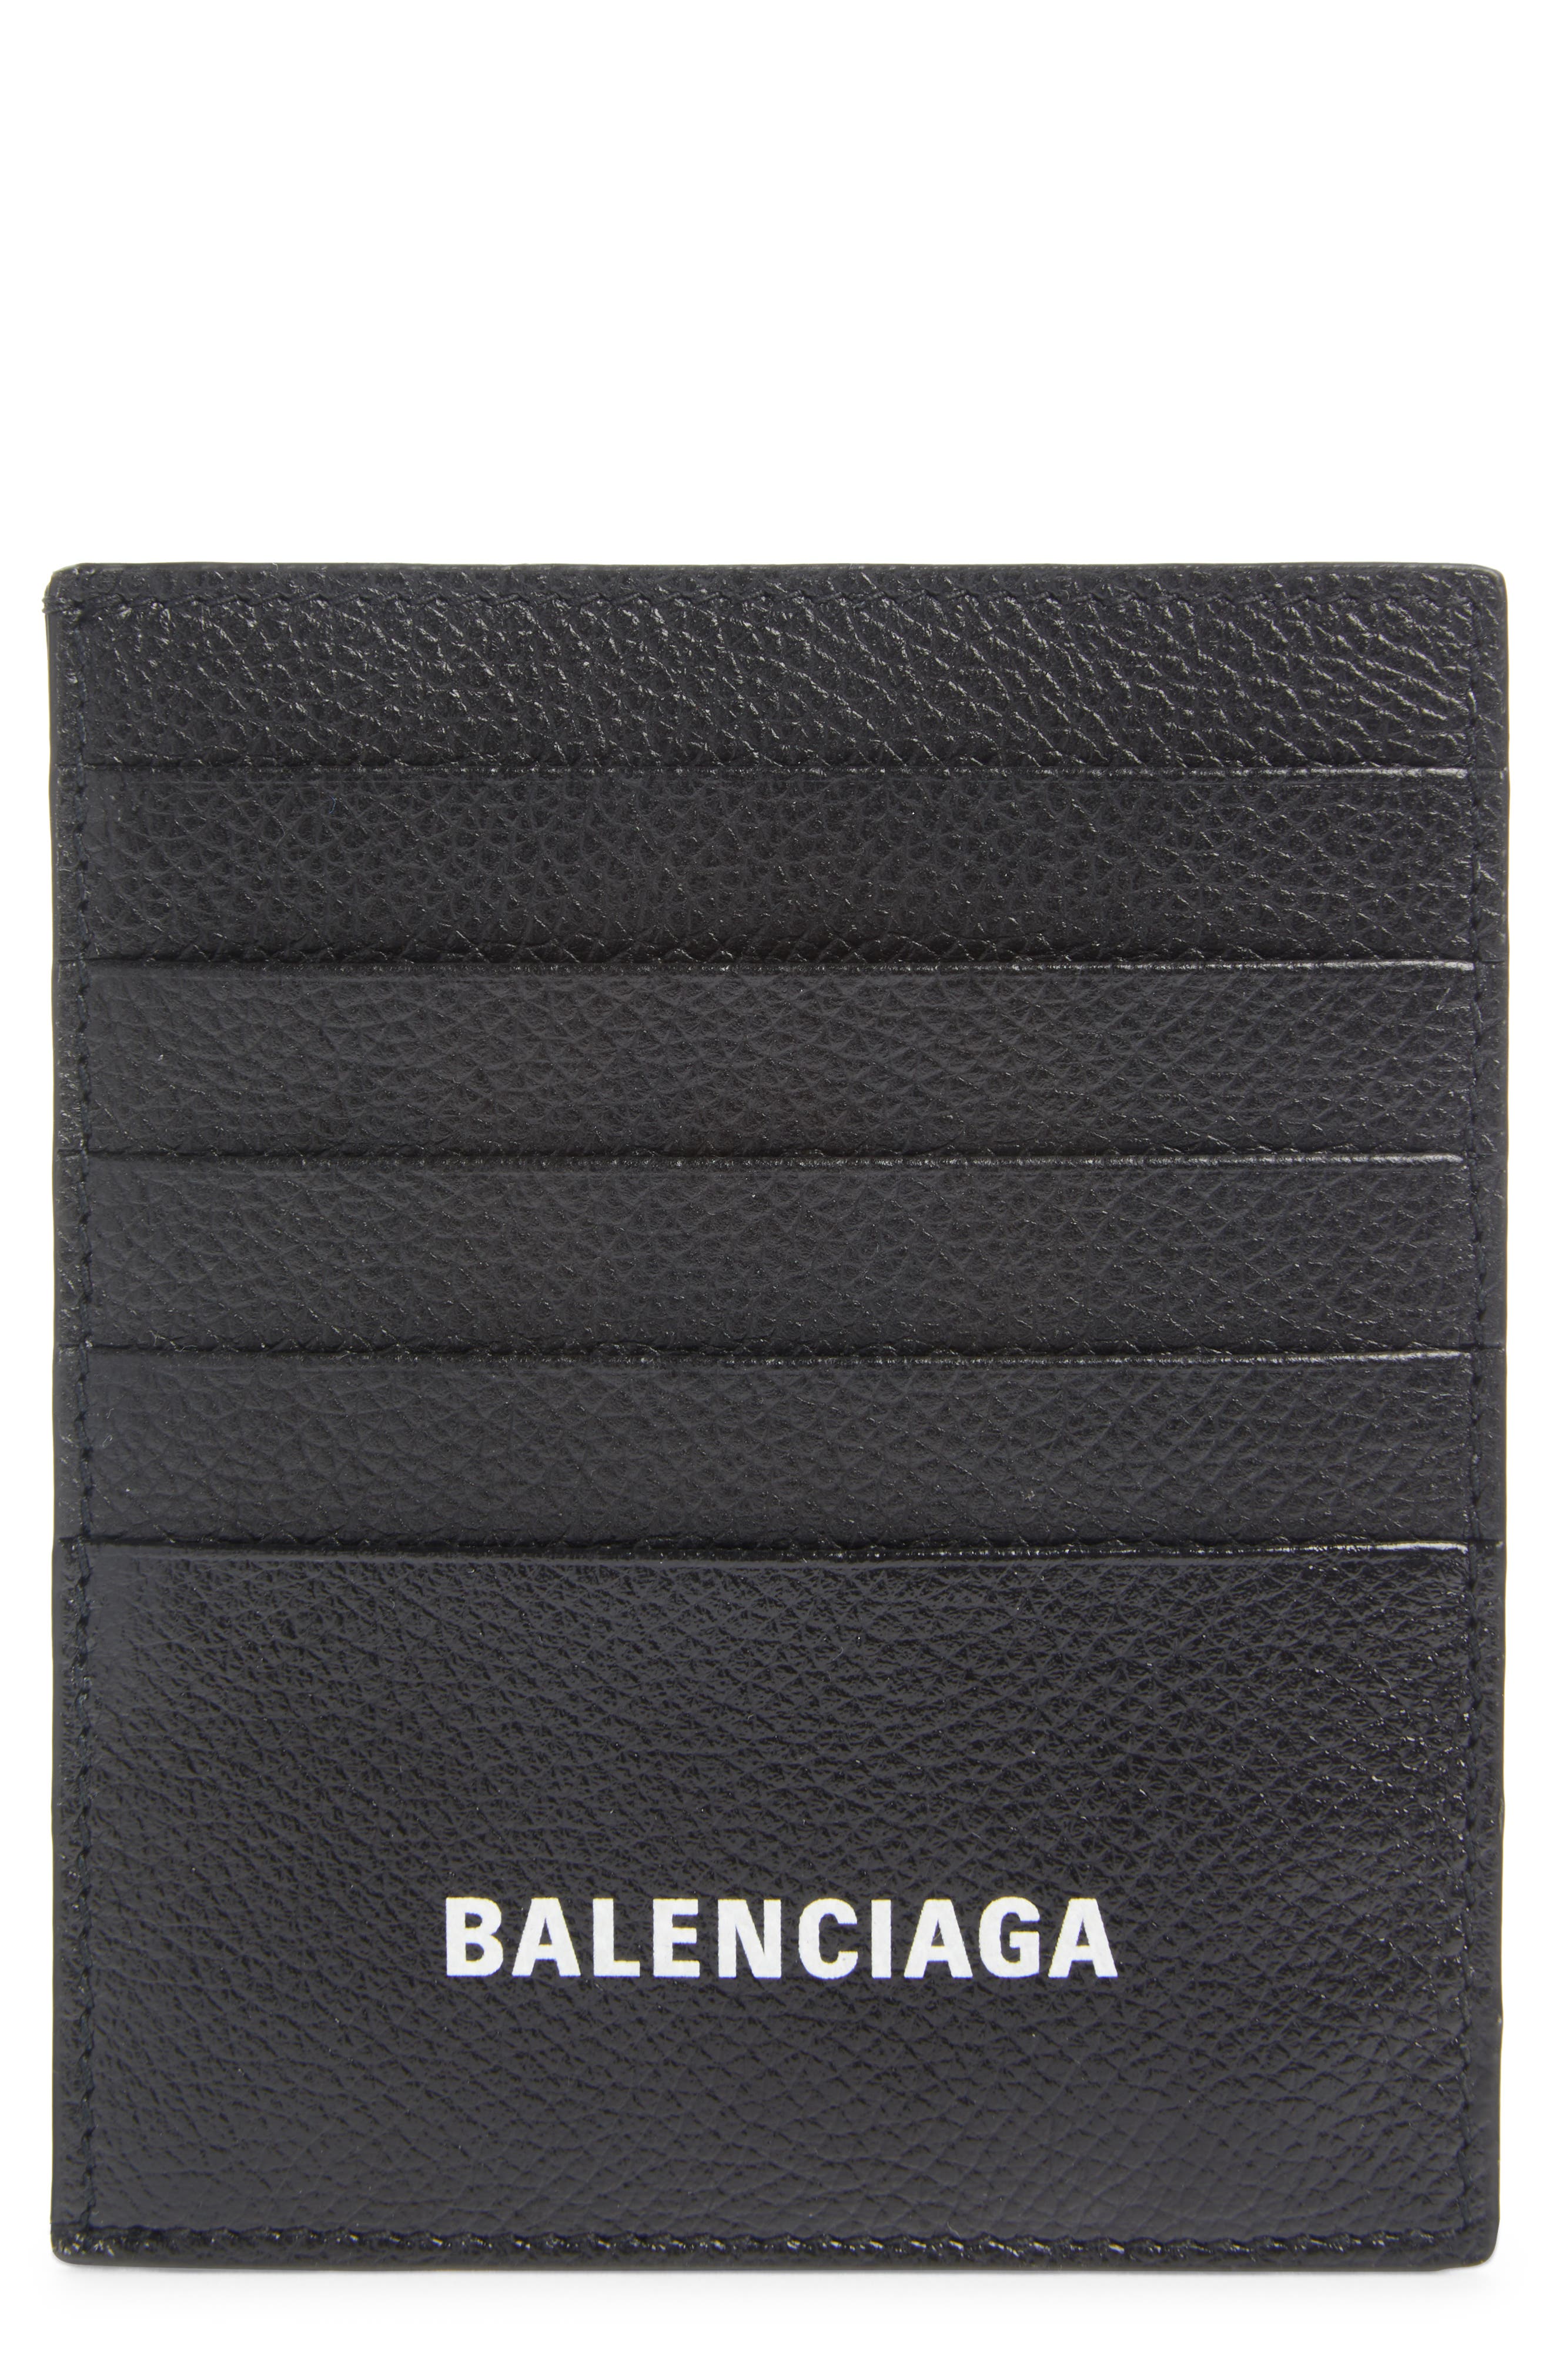 Balenciaga Cash Logo Vertical Leather Card Case in Black/L White at Nordstrom